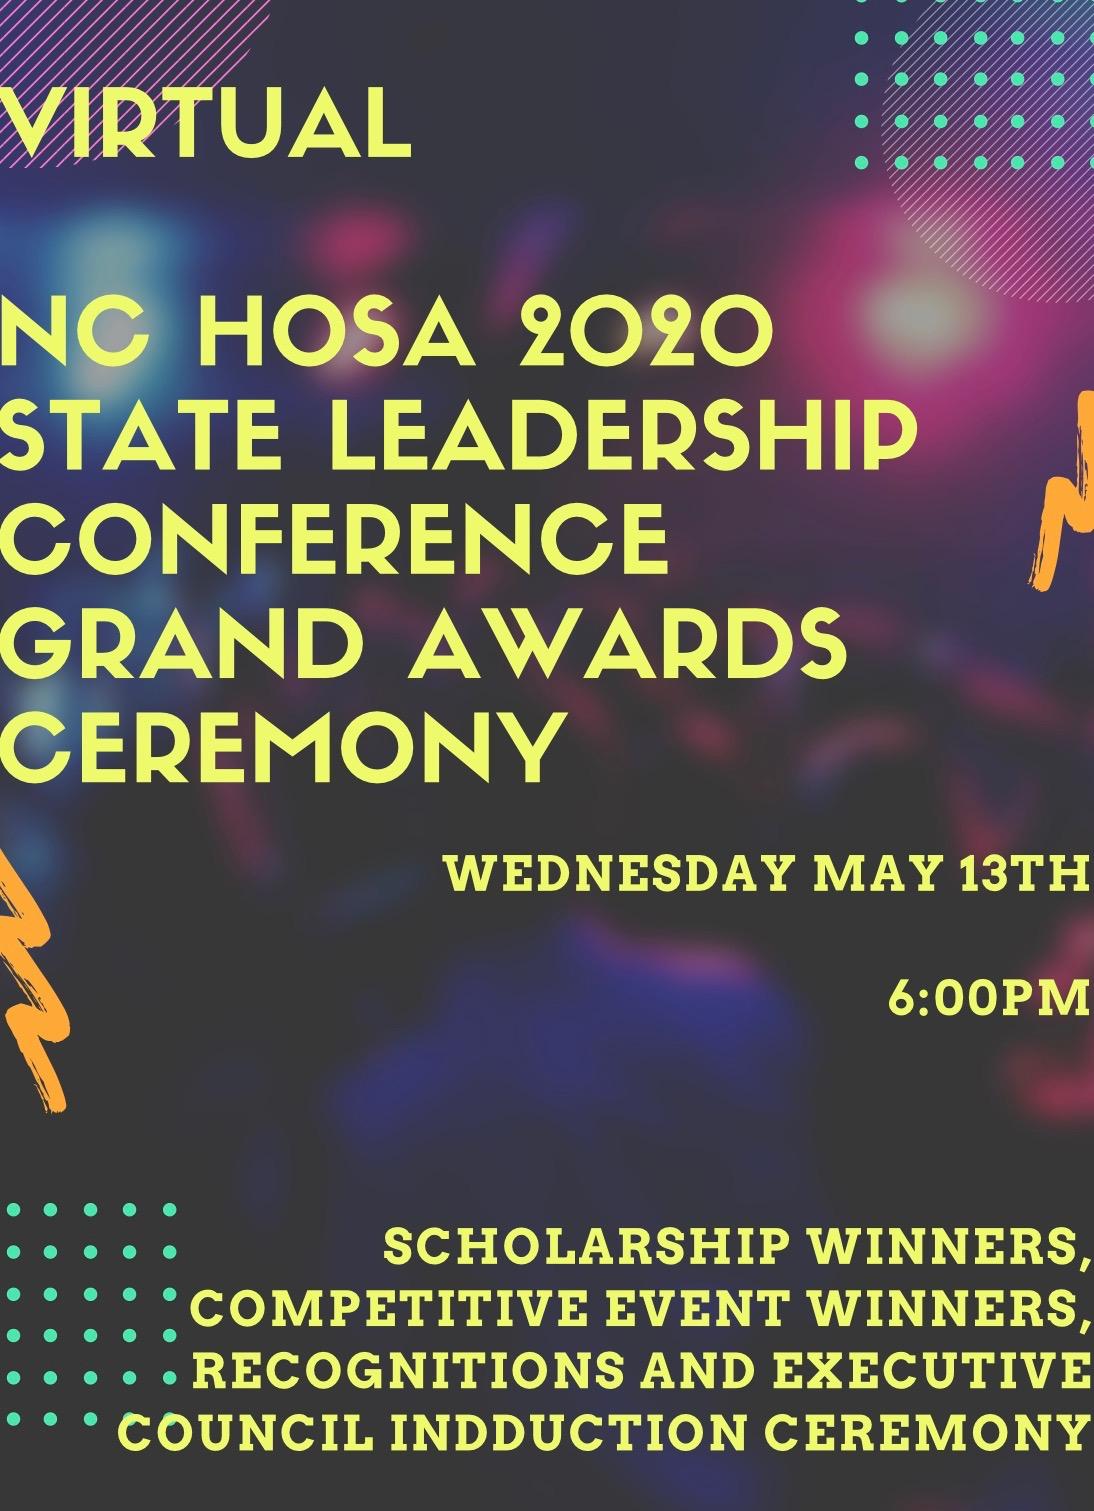 NC HOSA 2020 Awards Ceremony